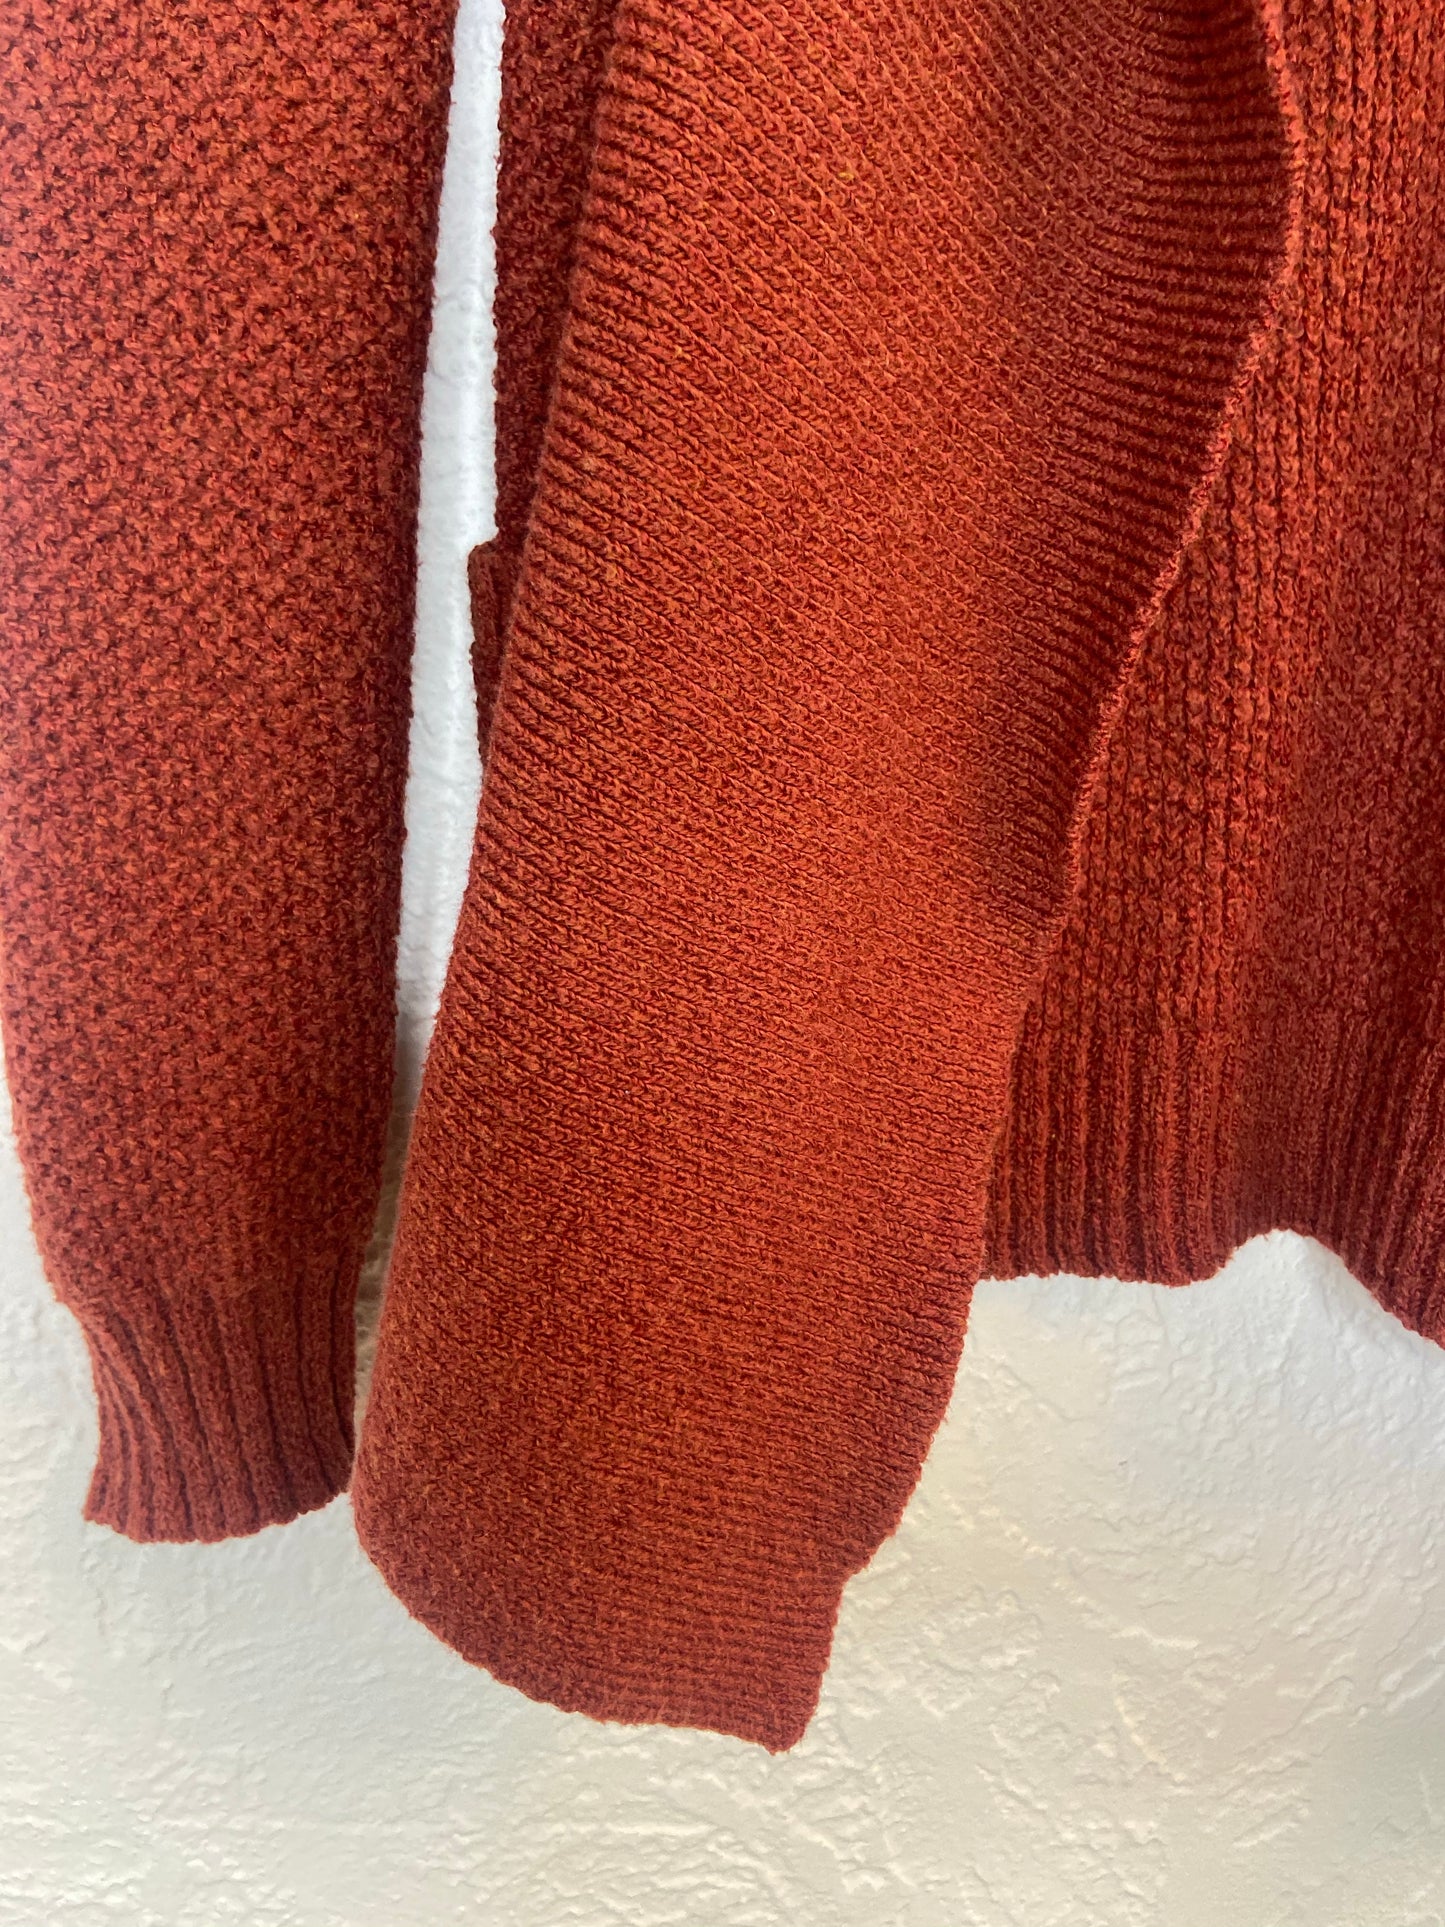 Rust Orange Sweater-S